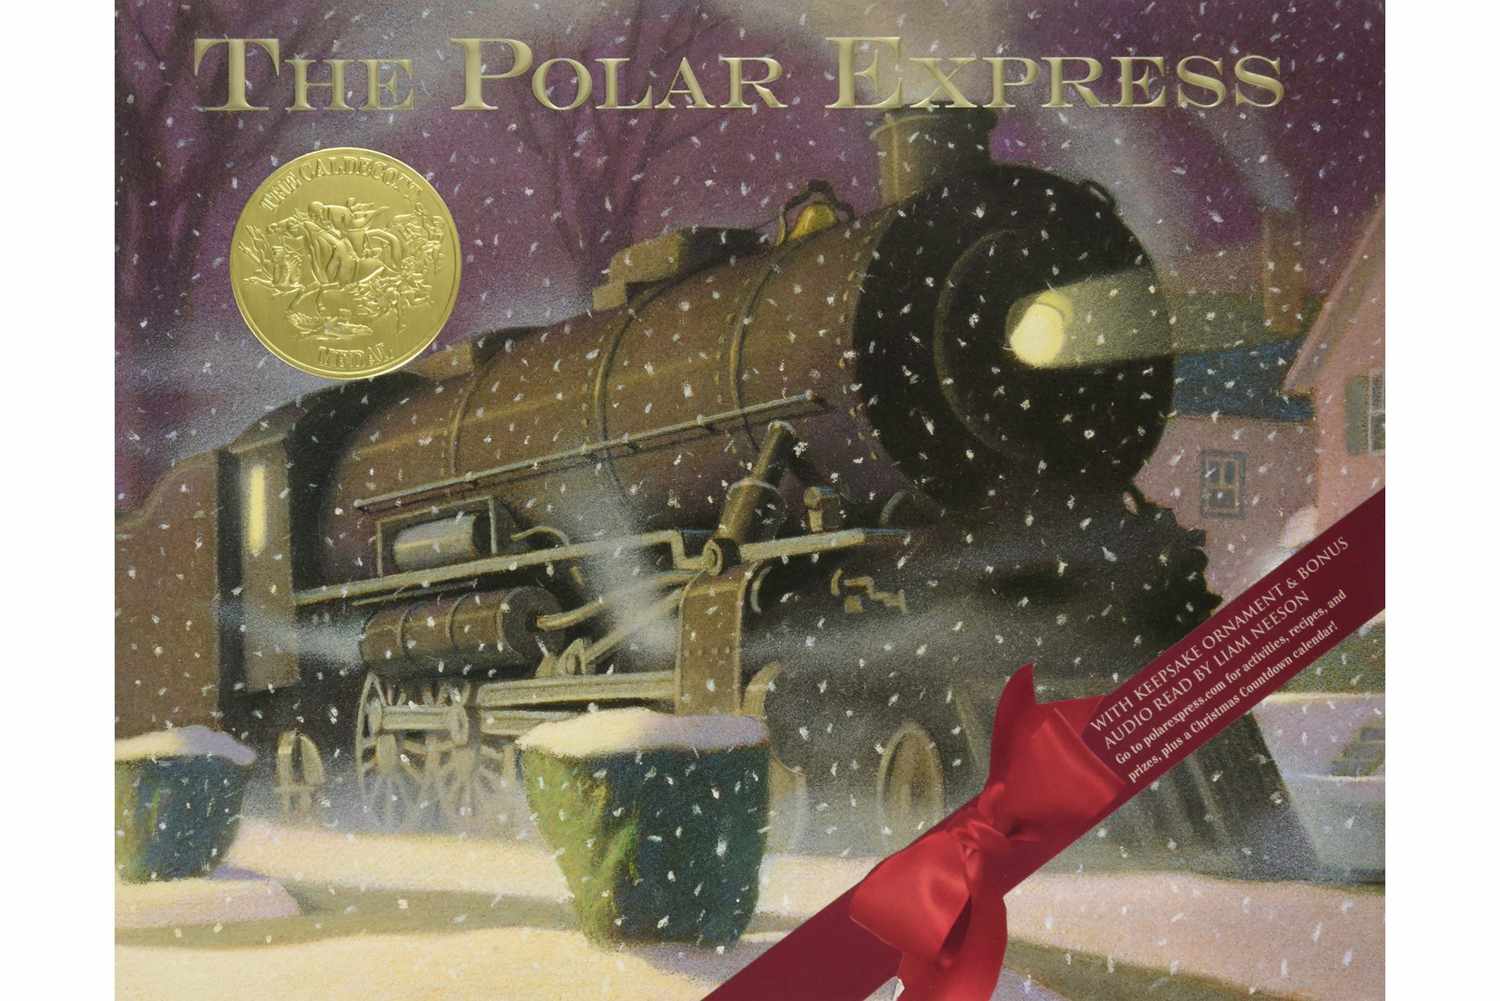 The Polar Express, by Chris Van Allsburg